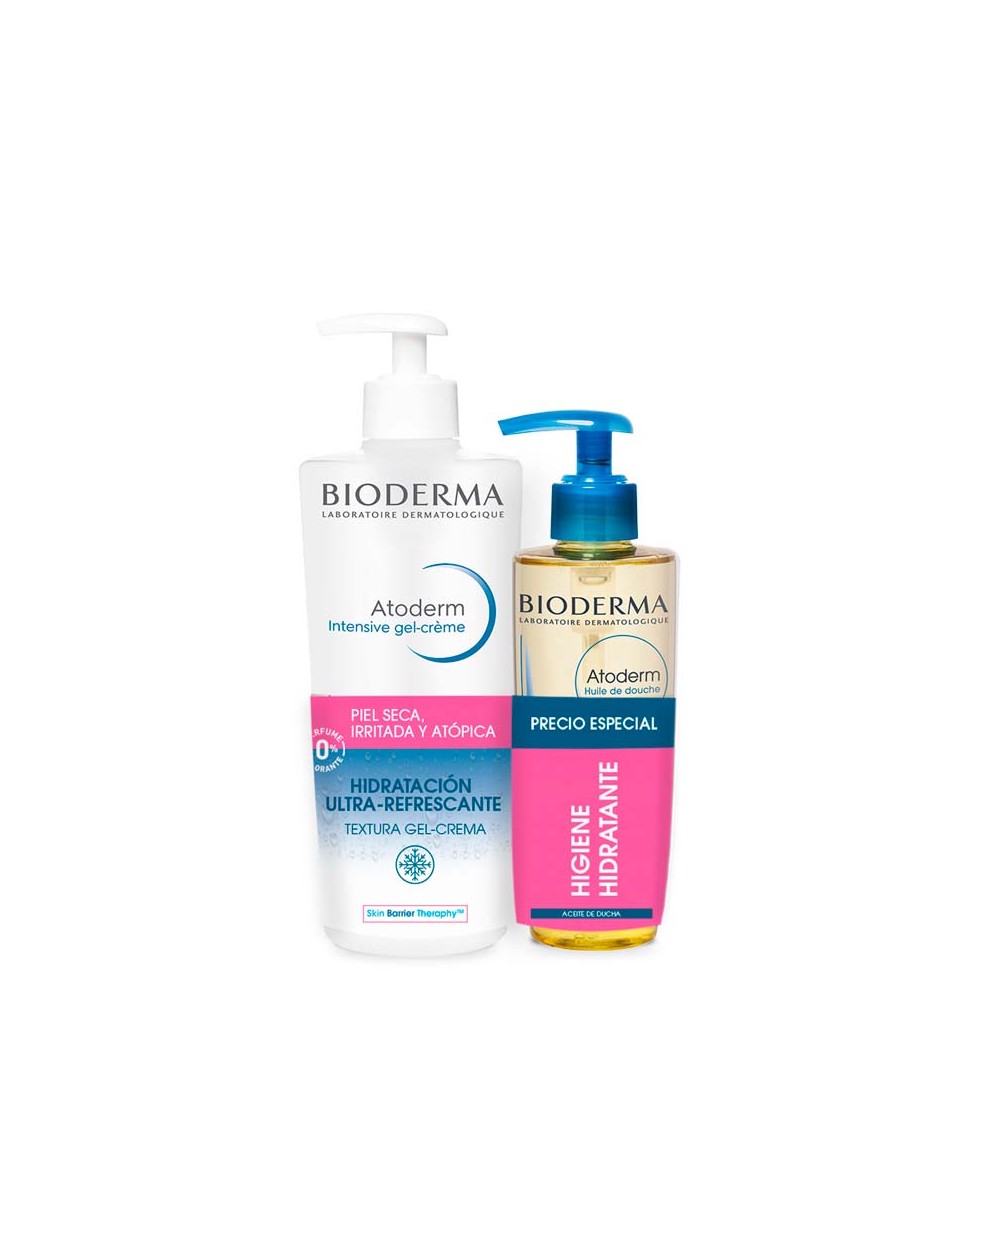 Bioderma Pack Ahorro: Atoderm Gel Crema + Atoderm Aceite de ducha